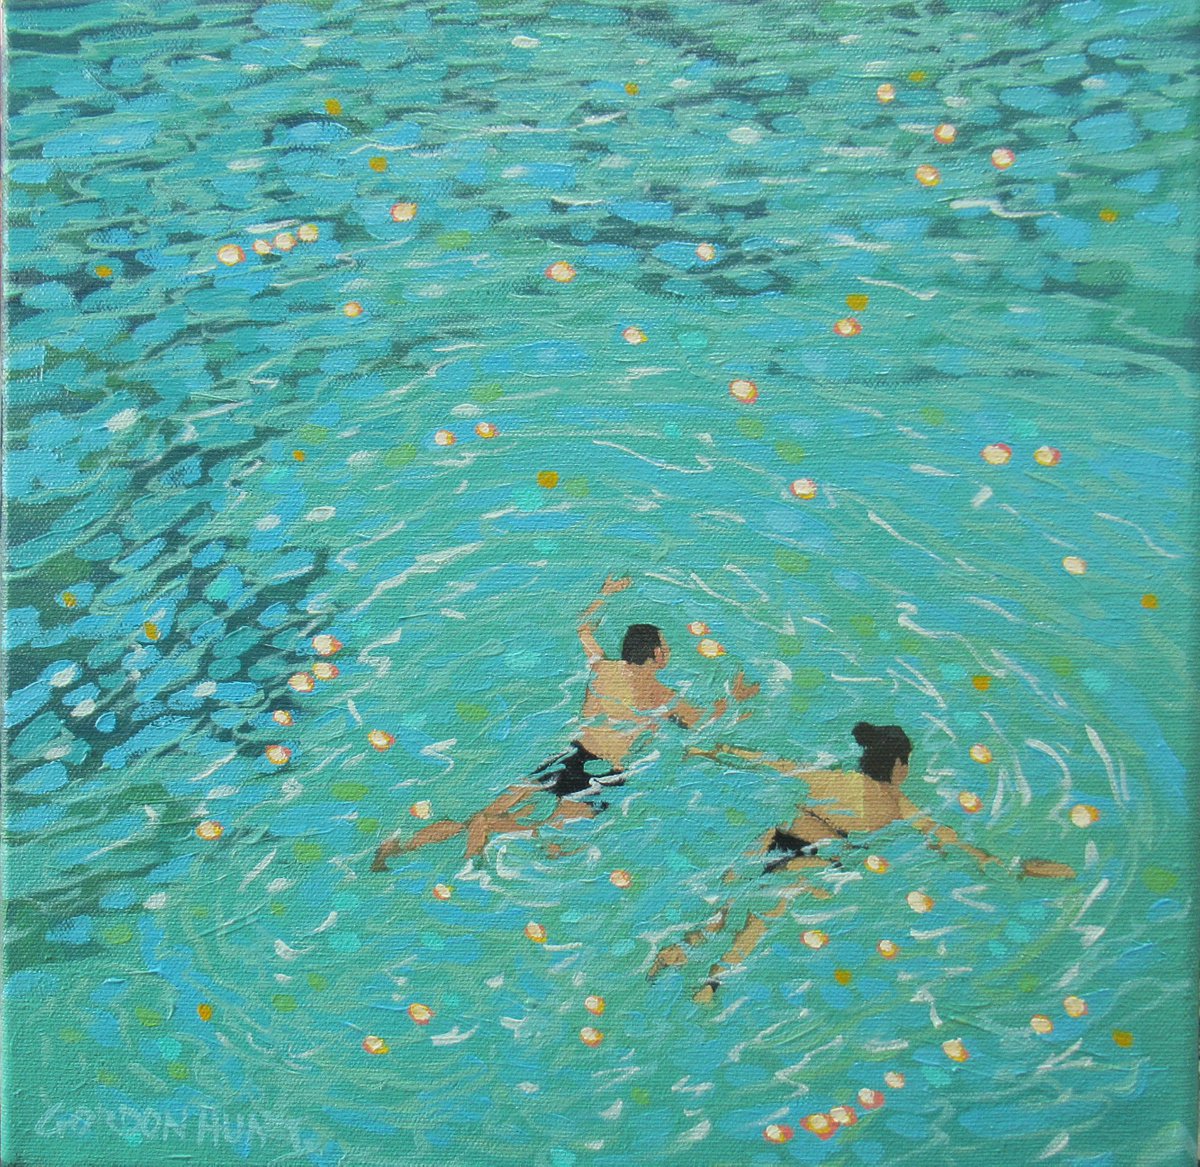 Swim Study Oil painting by Gordon Hunt | Artfinder